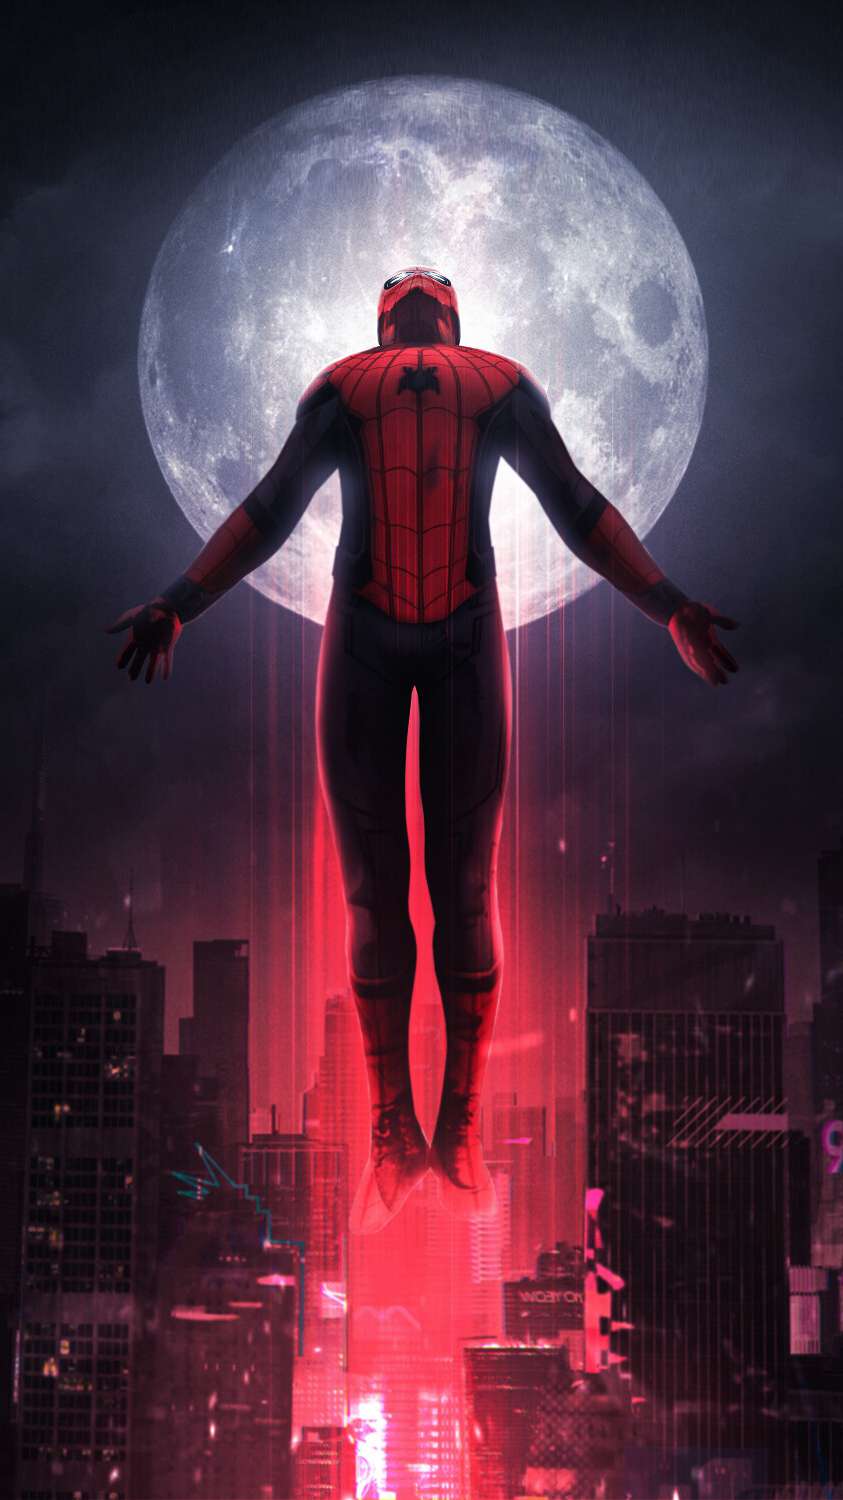 Spider Man iPhone Wallpaper